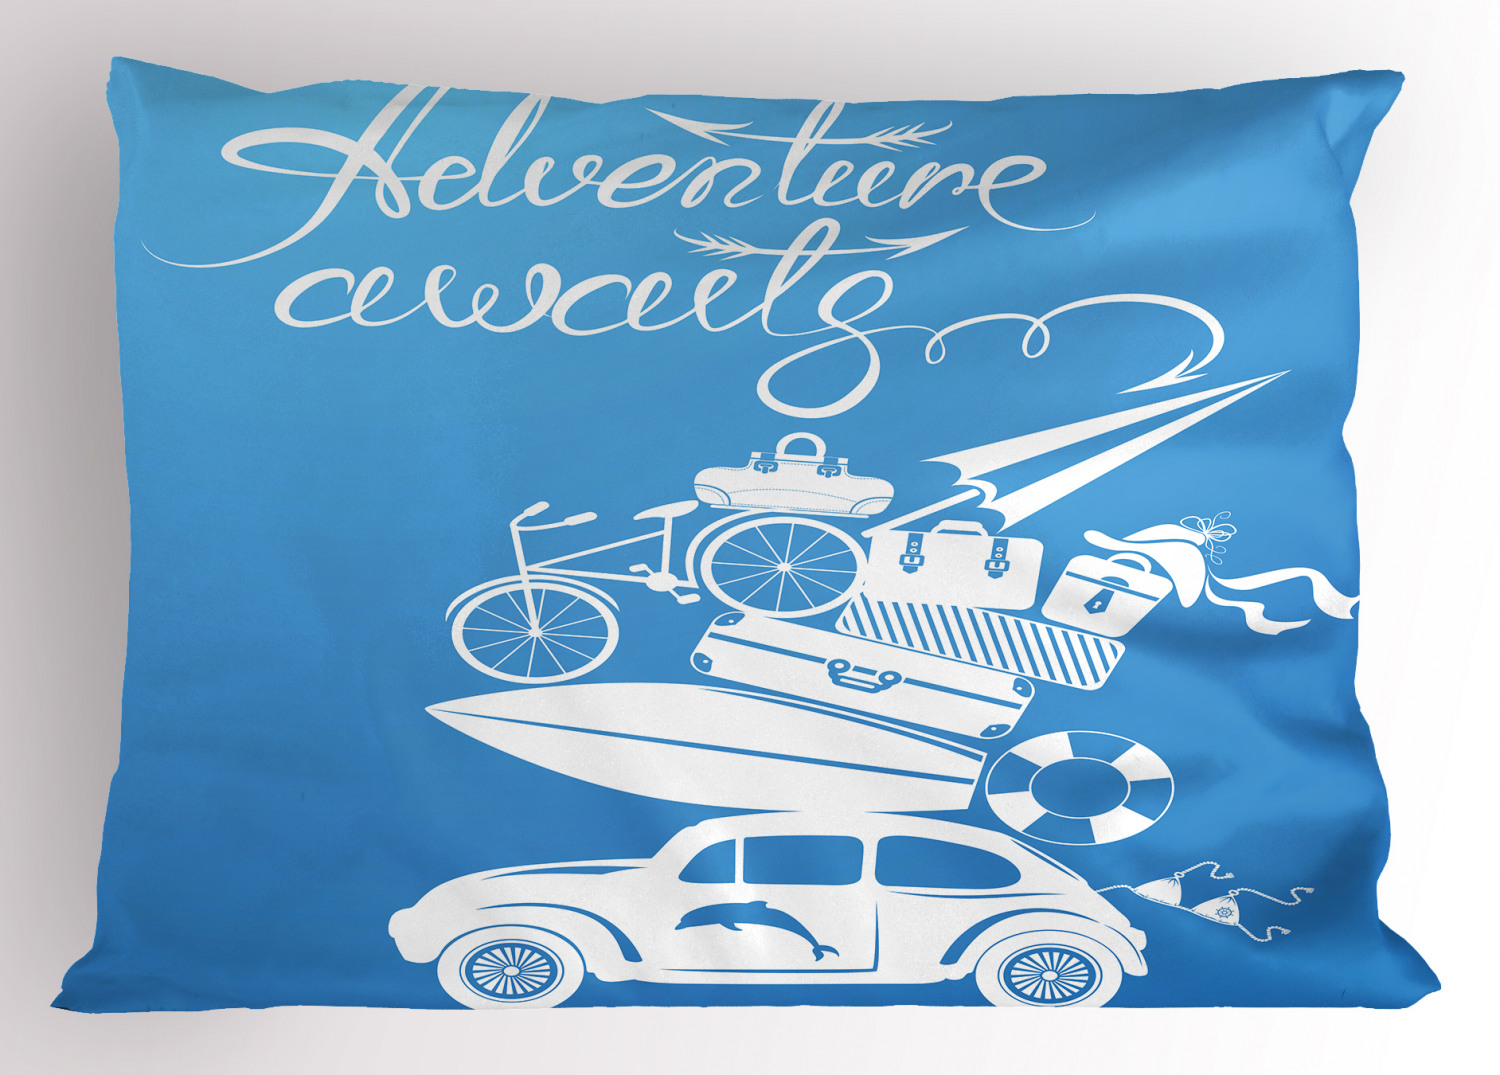 Details about   Ride Quote Pillow Sham Decorative Pillowcase 3 Sizes Bedroom Decoration 